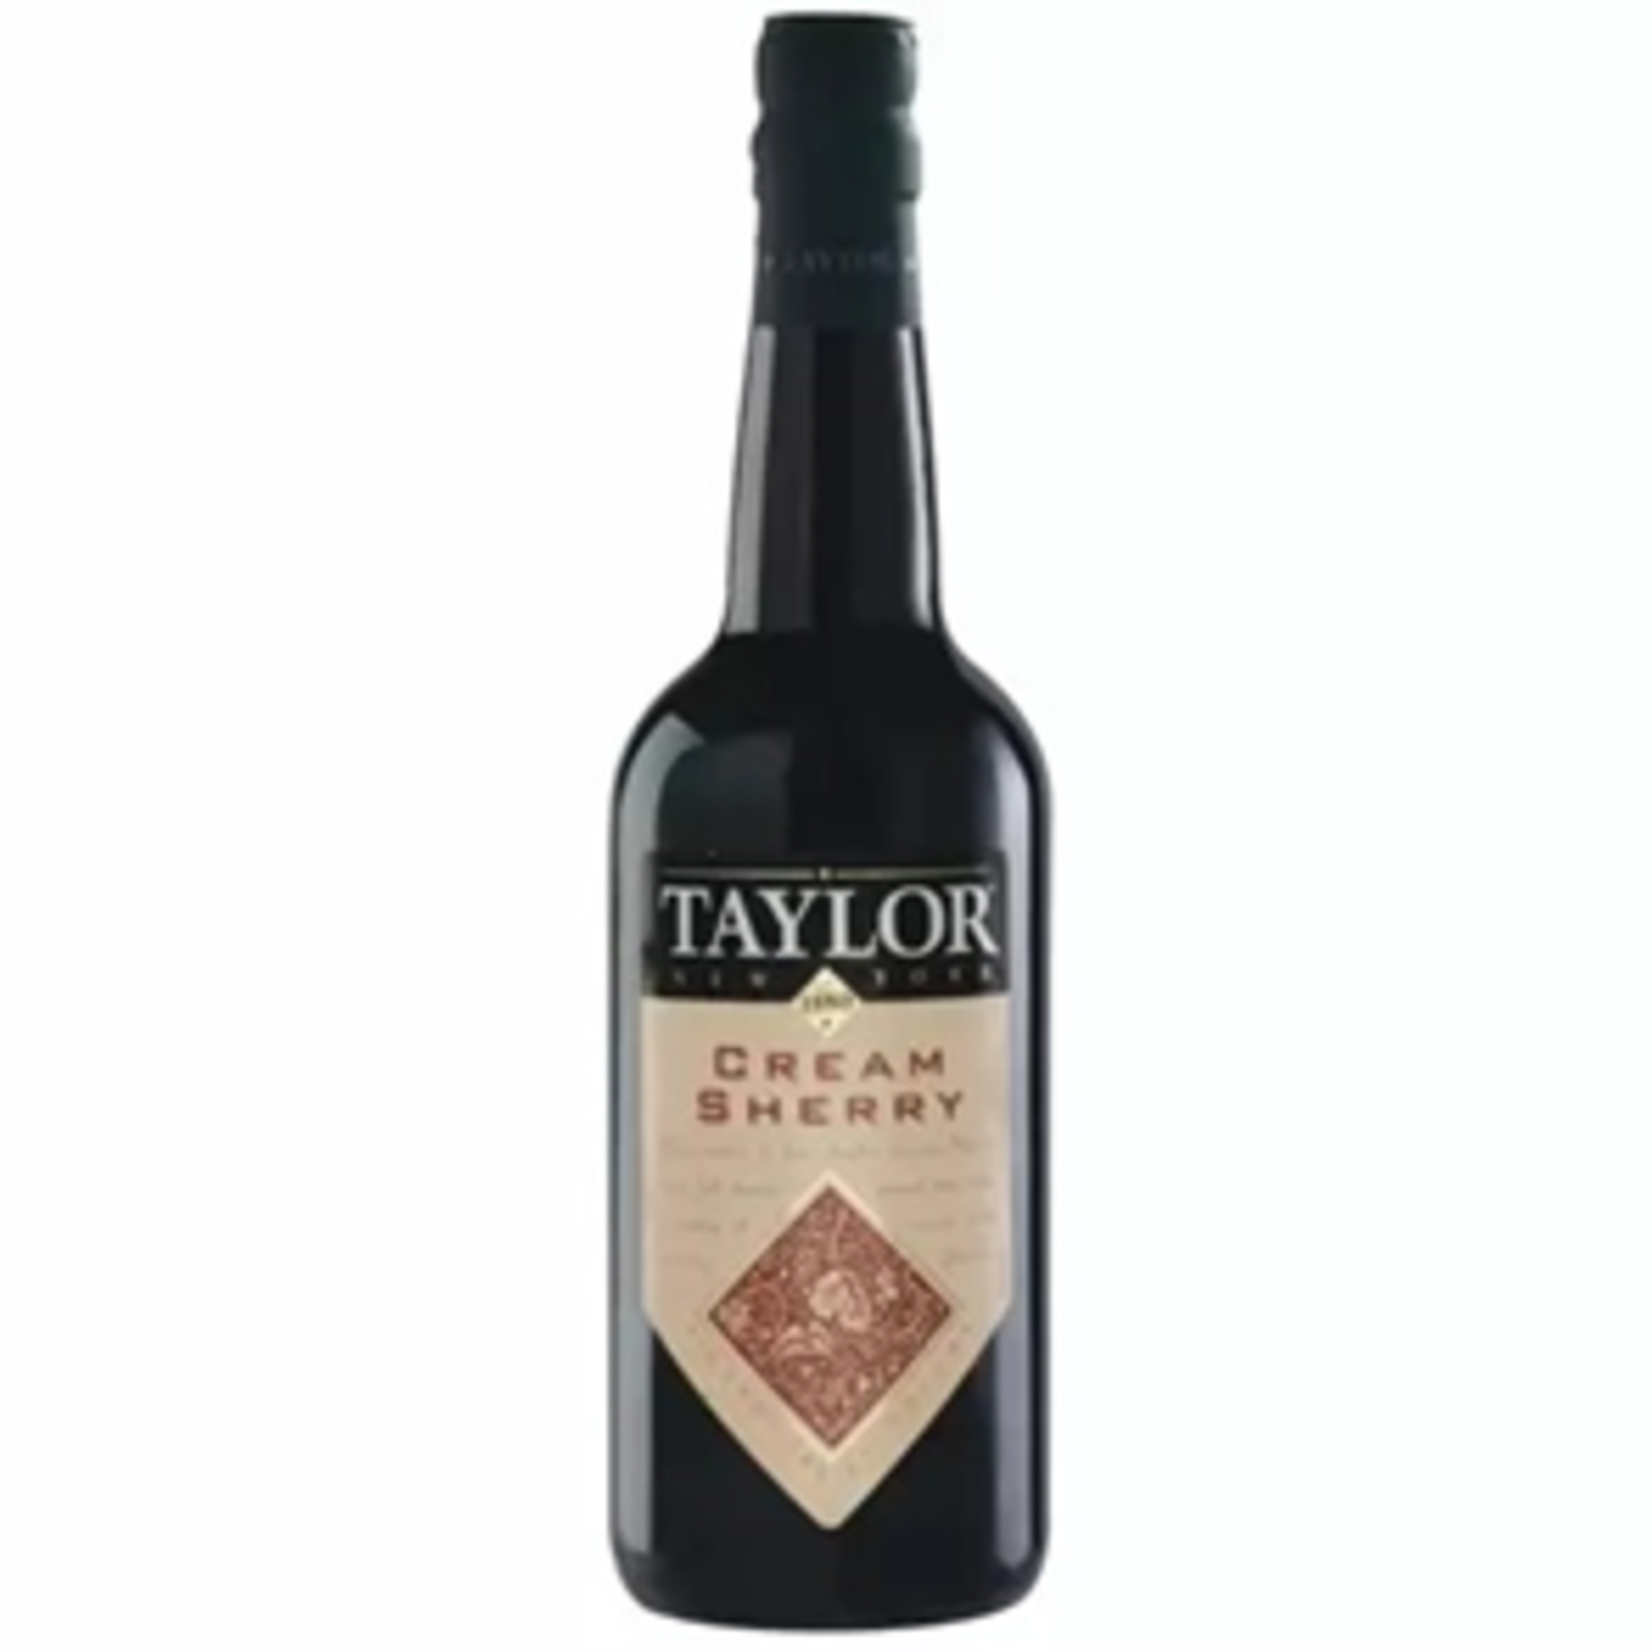 Taylor Taylor Cream Sherry 750 mL